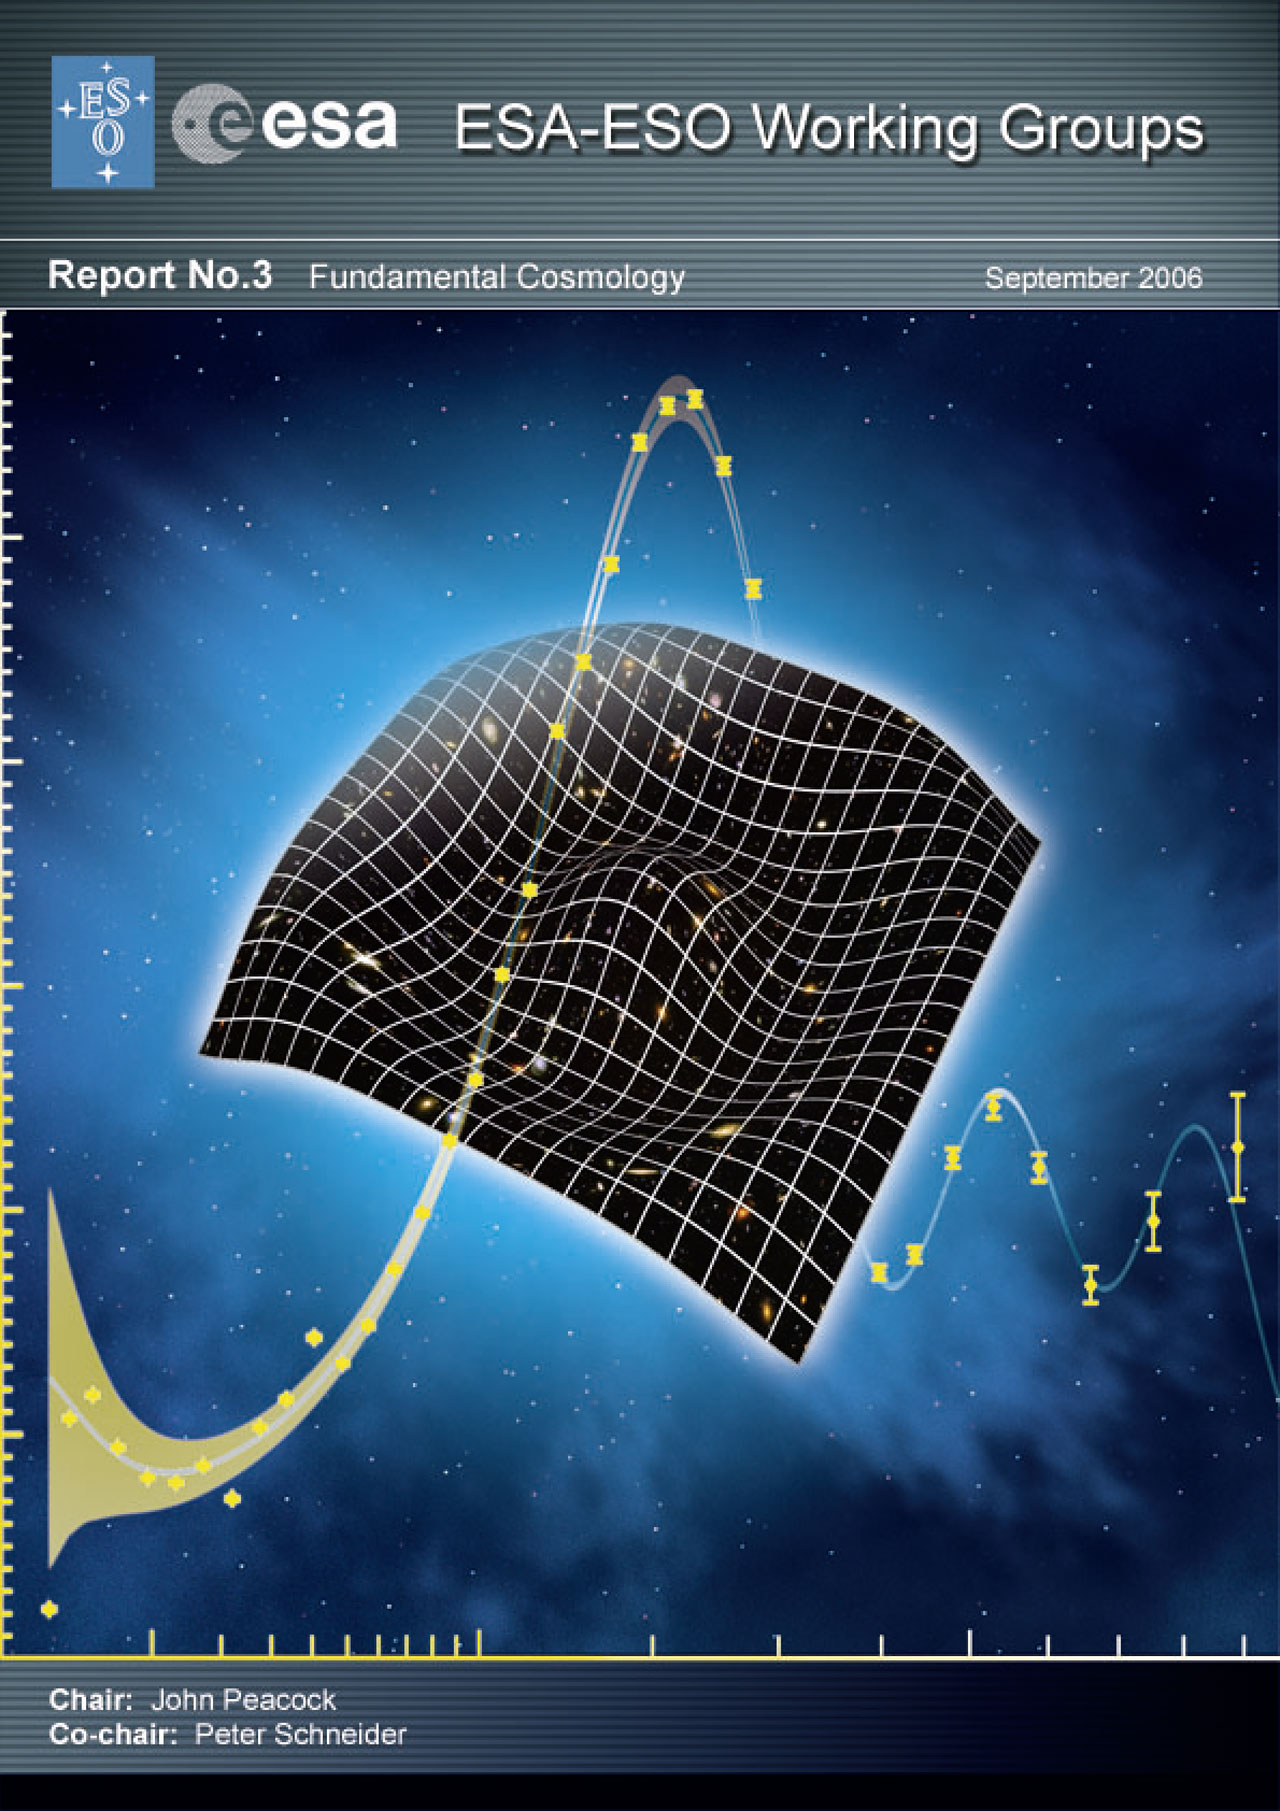 ESA-ESO WG report on Fundamental Cosmology (September 2006)